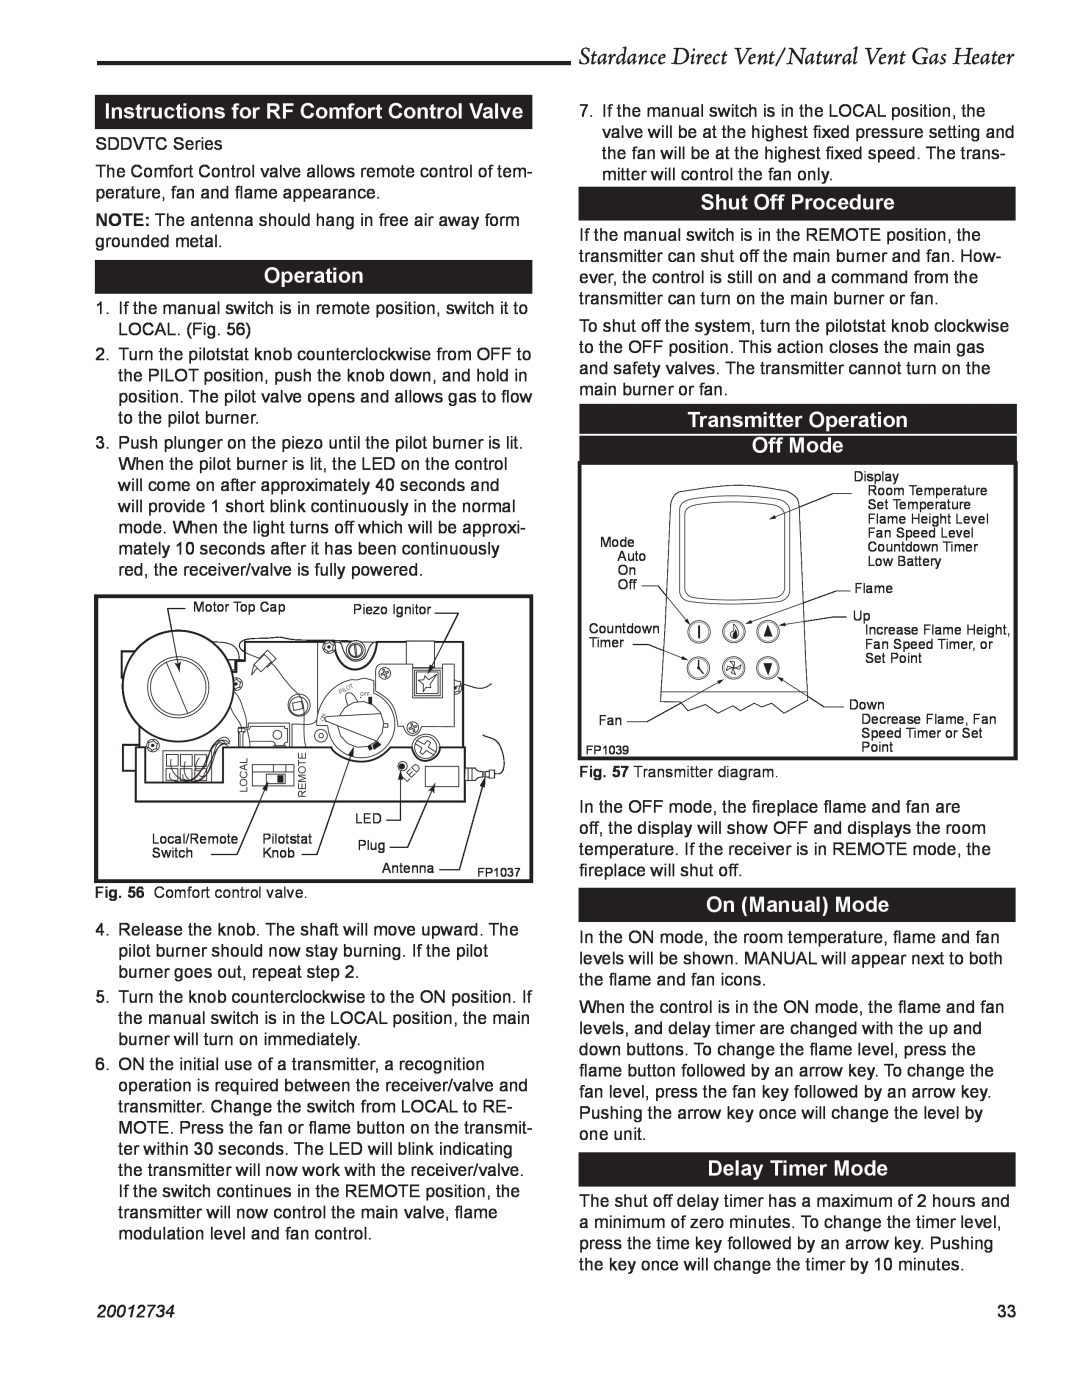 Vermont Casting SDDVT Instructions for RF Comfort Control Valve, Operation, Shut Off Procedure, On Manual Mode, 20012734 